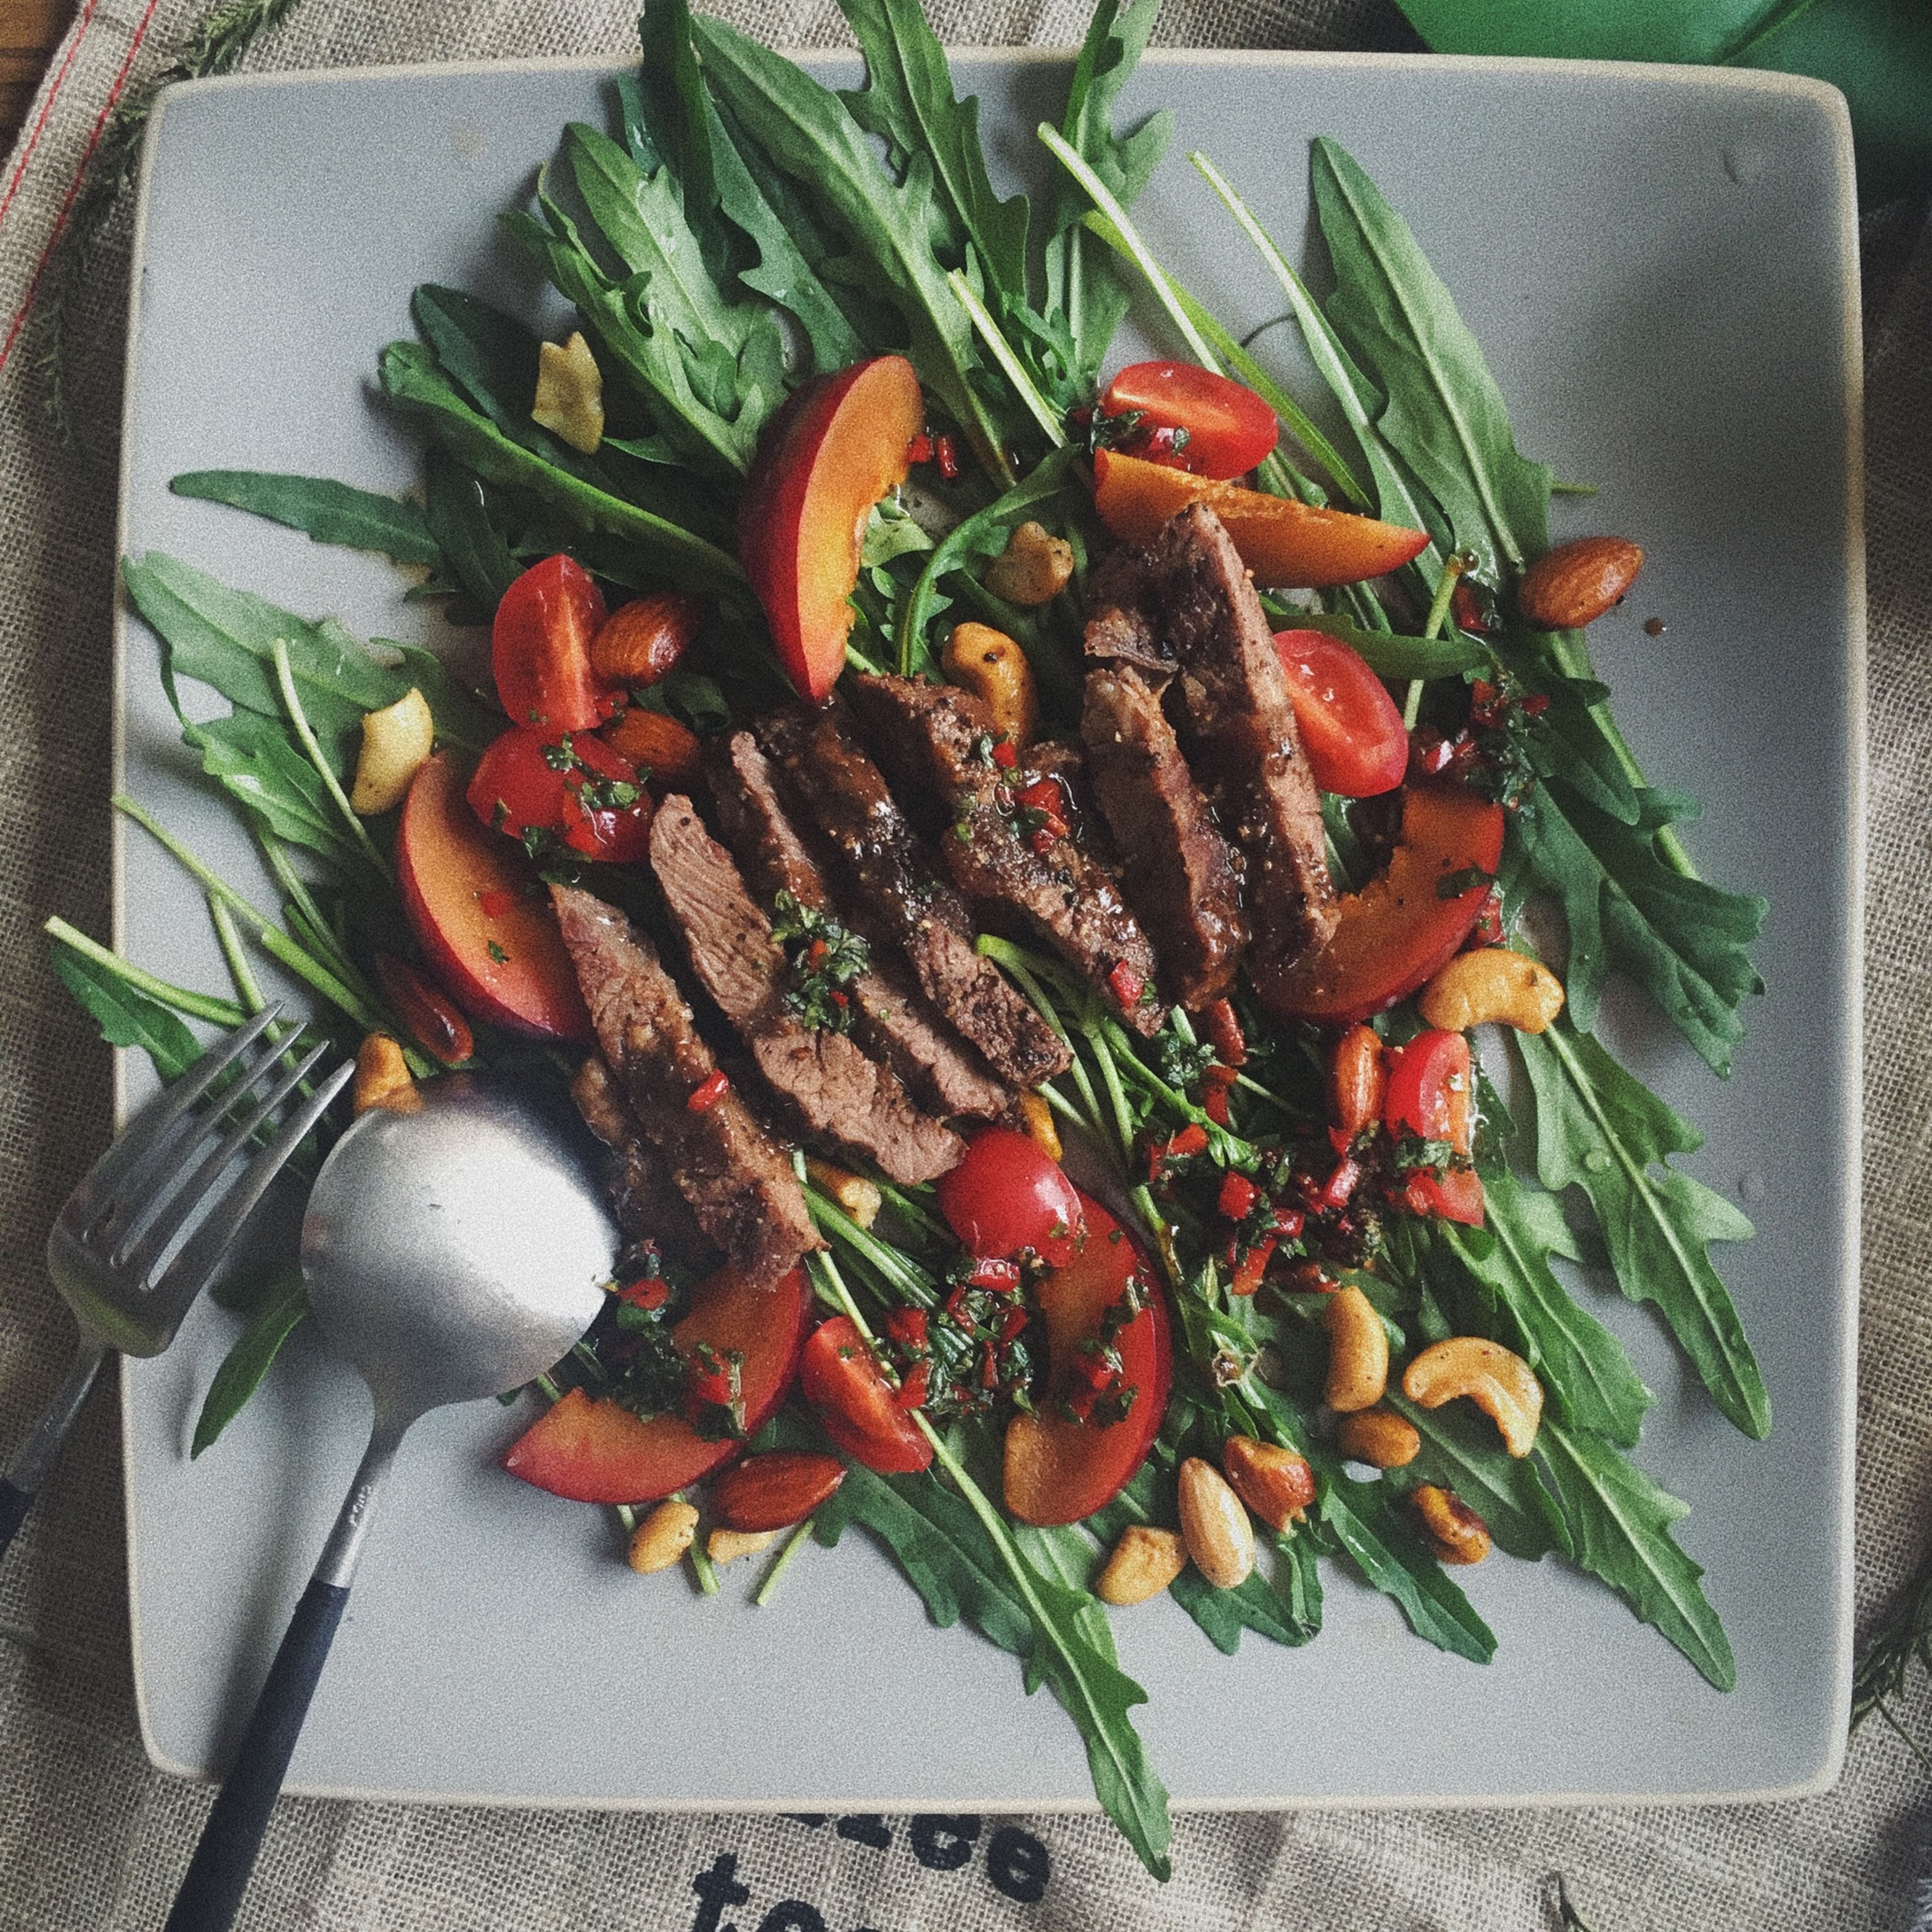 Summer salad with steak and nectarine